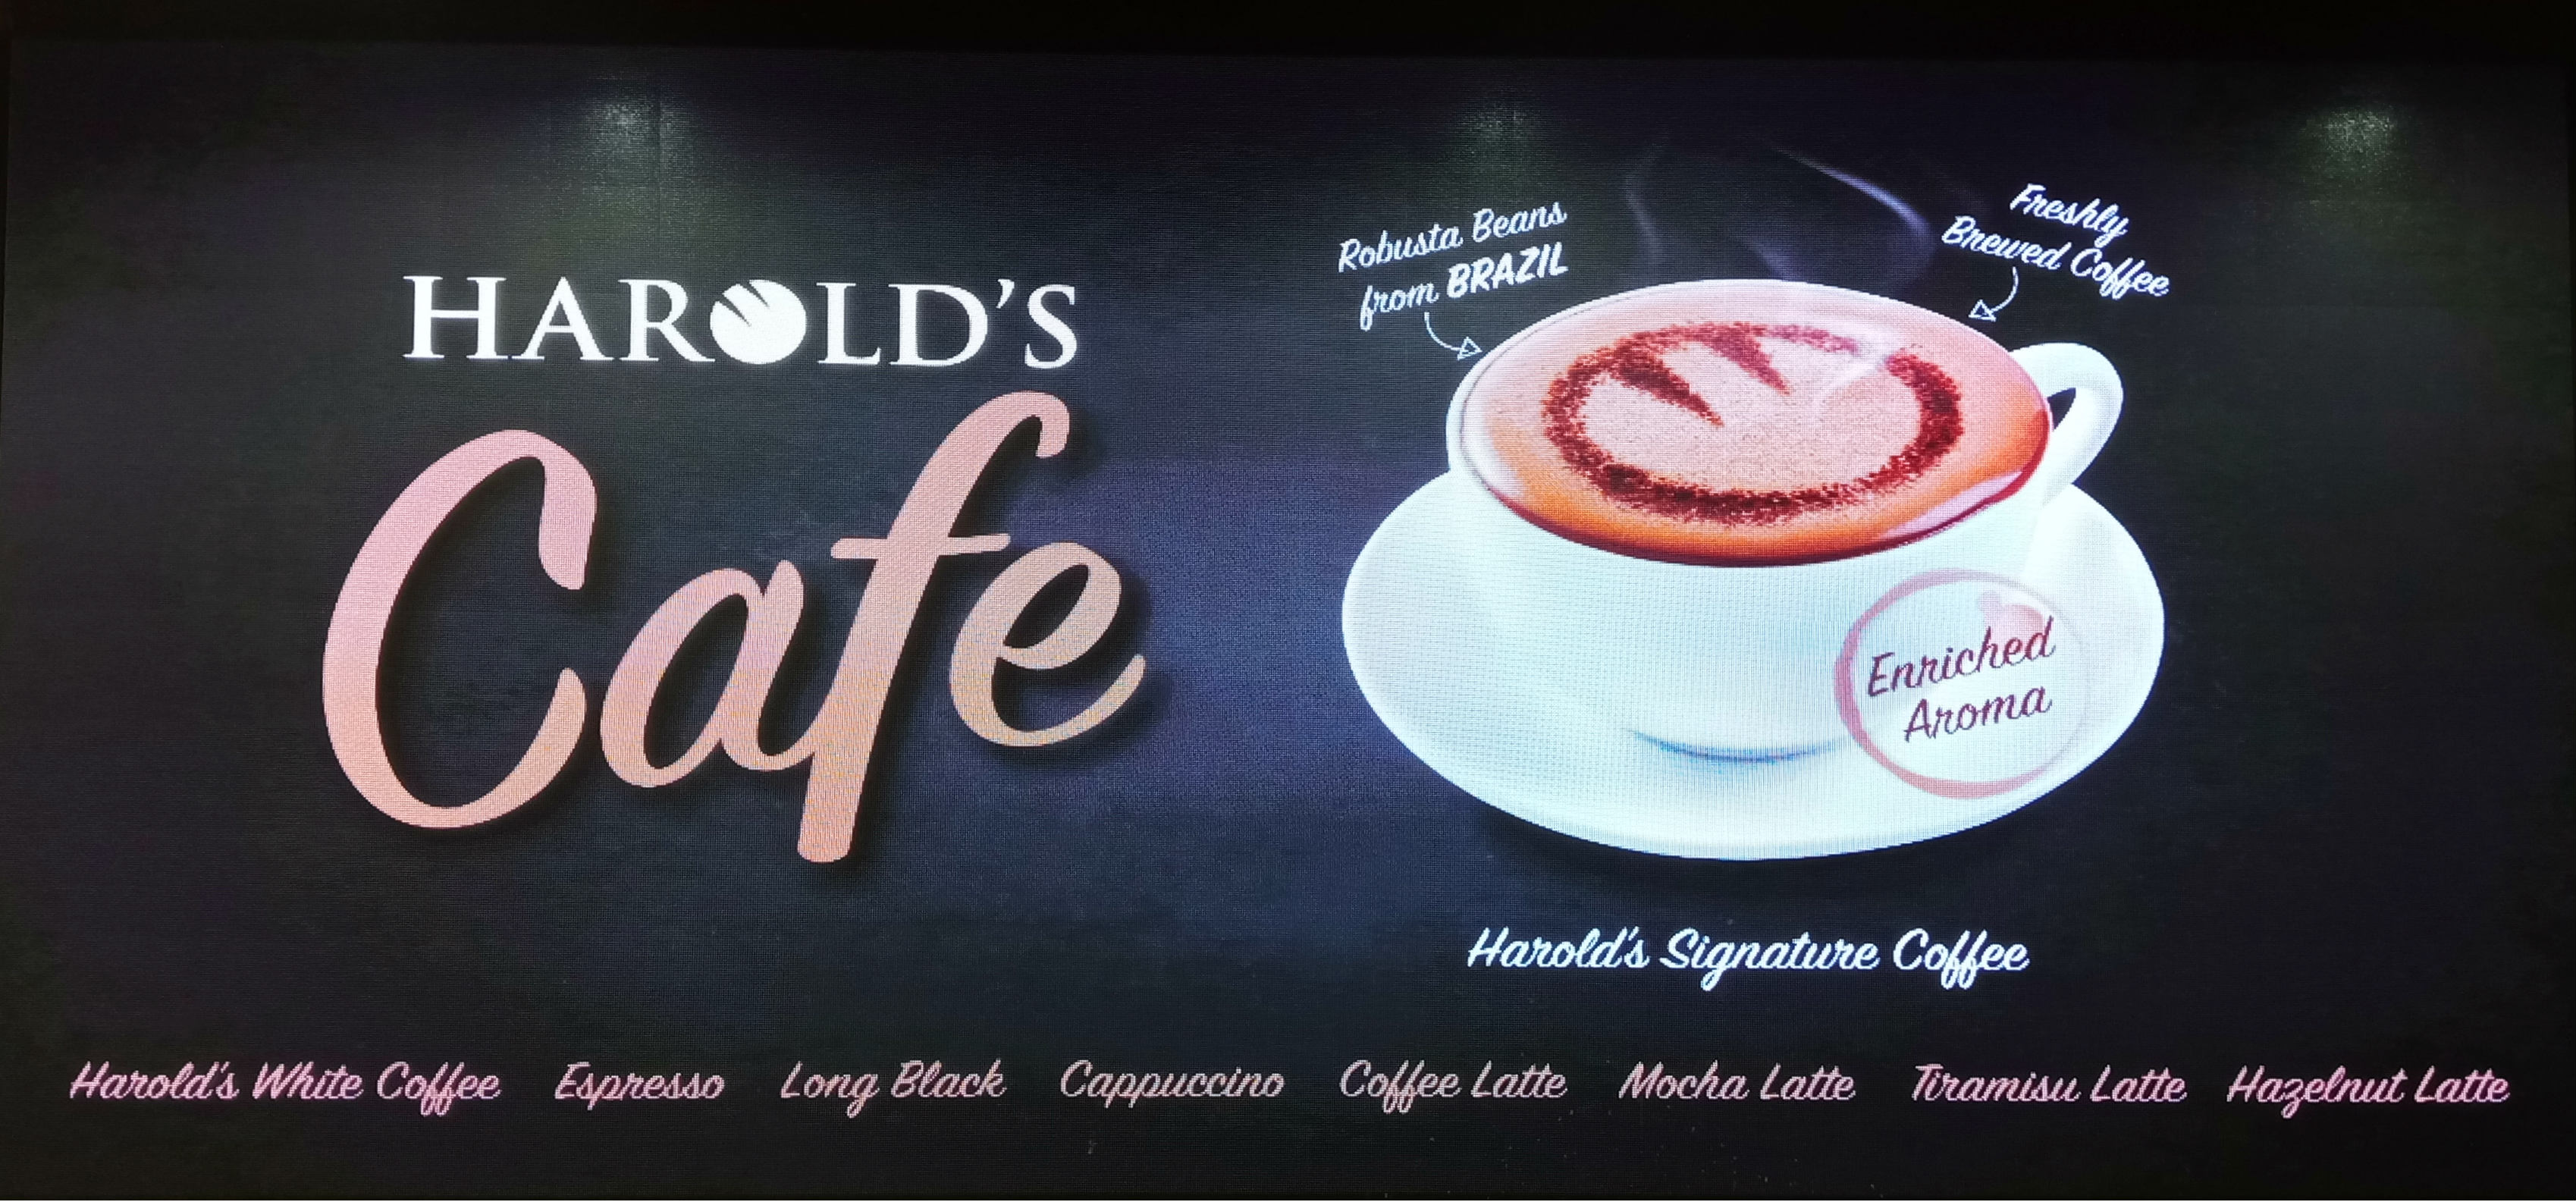 Harold's Cafe